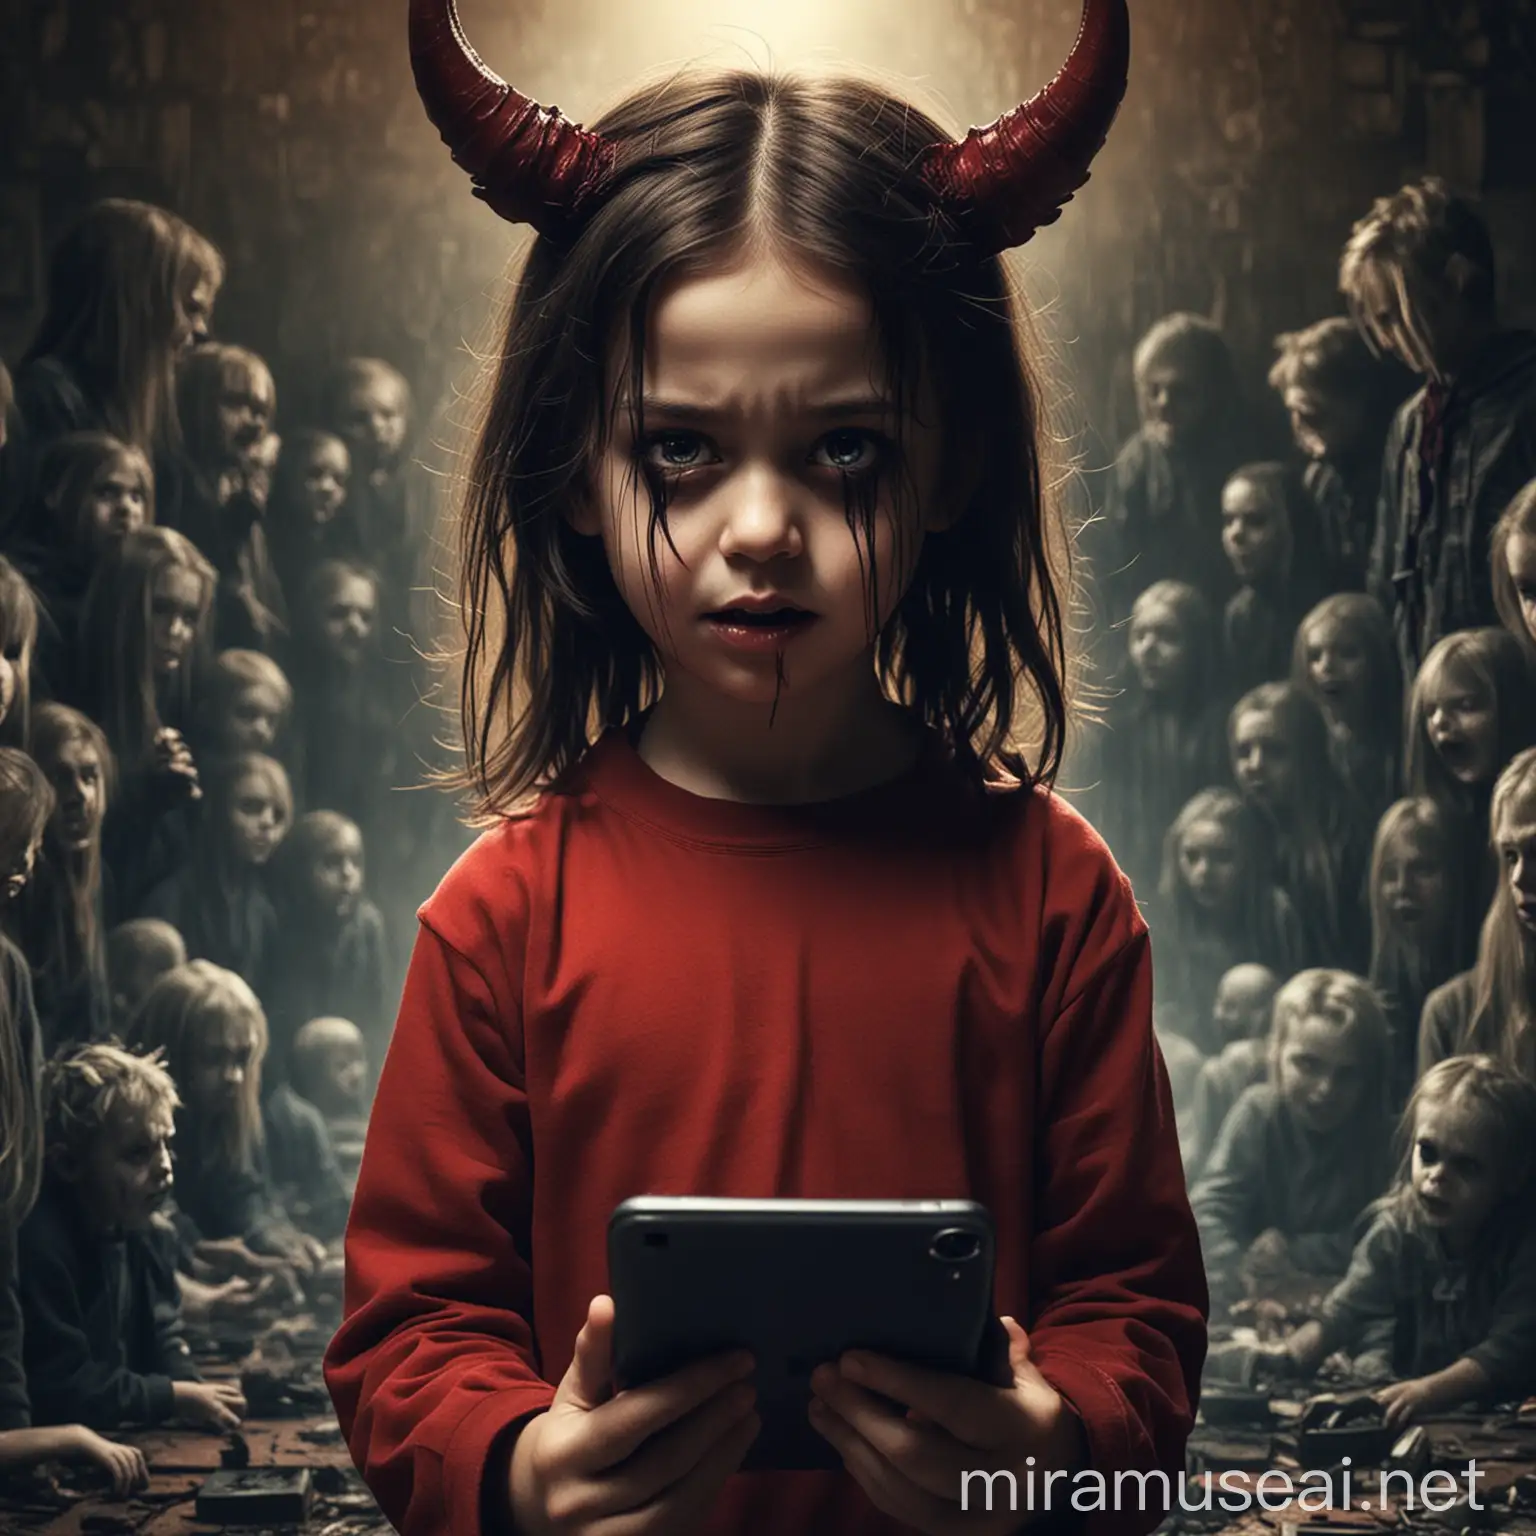 social media as a demonic entity corrupting children